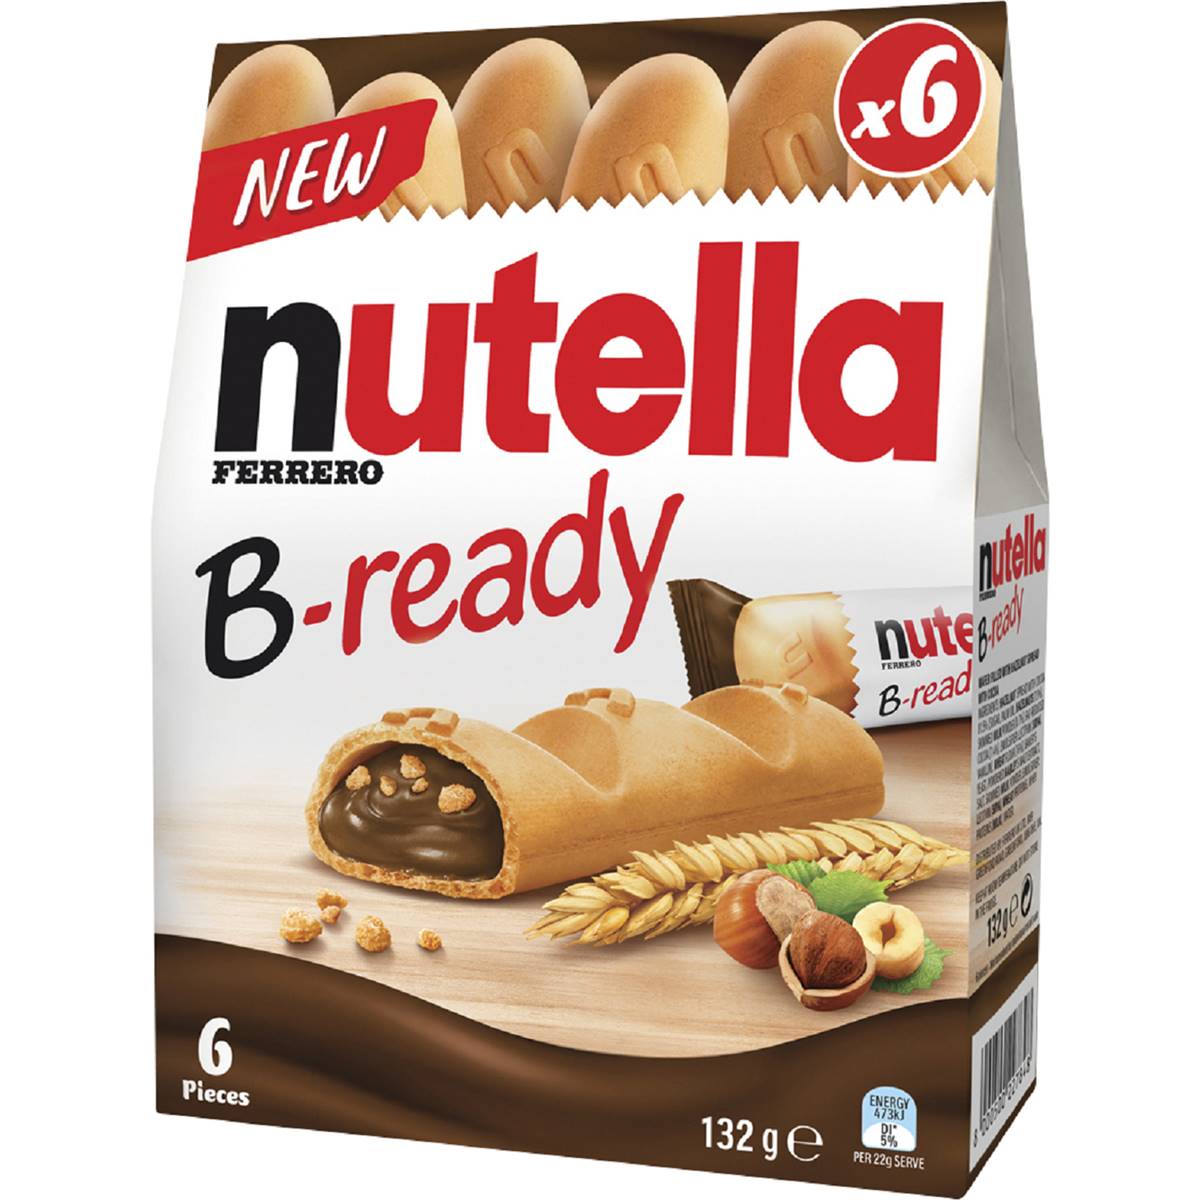 Ferrero Nutella B-ready 6 piece 132g